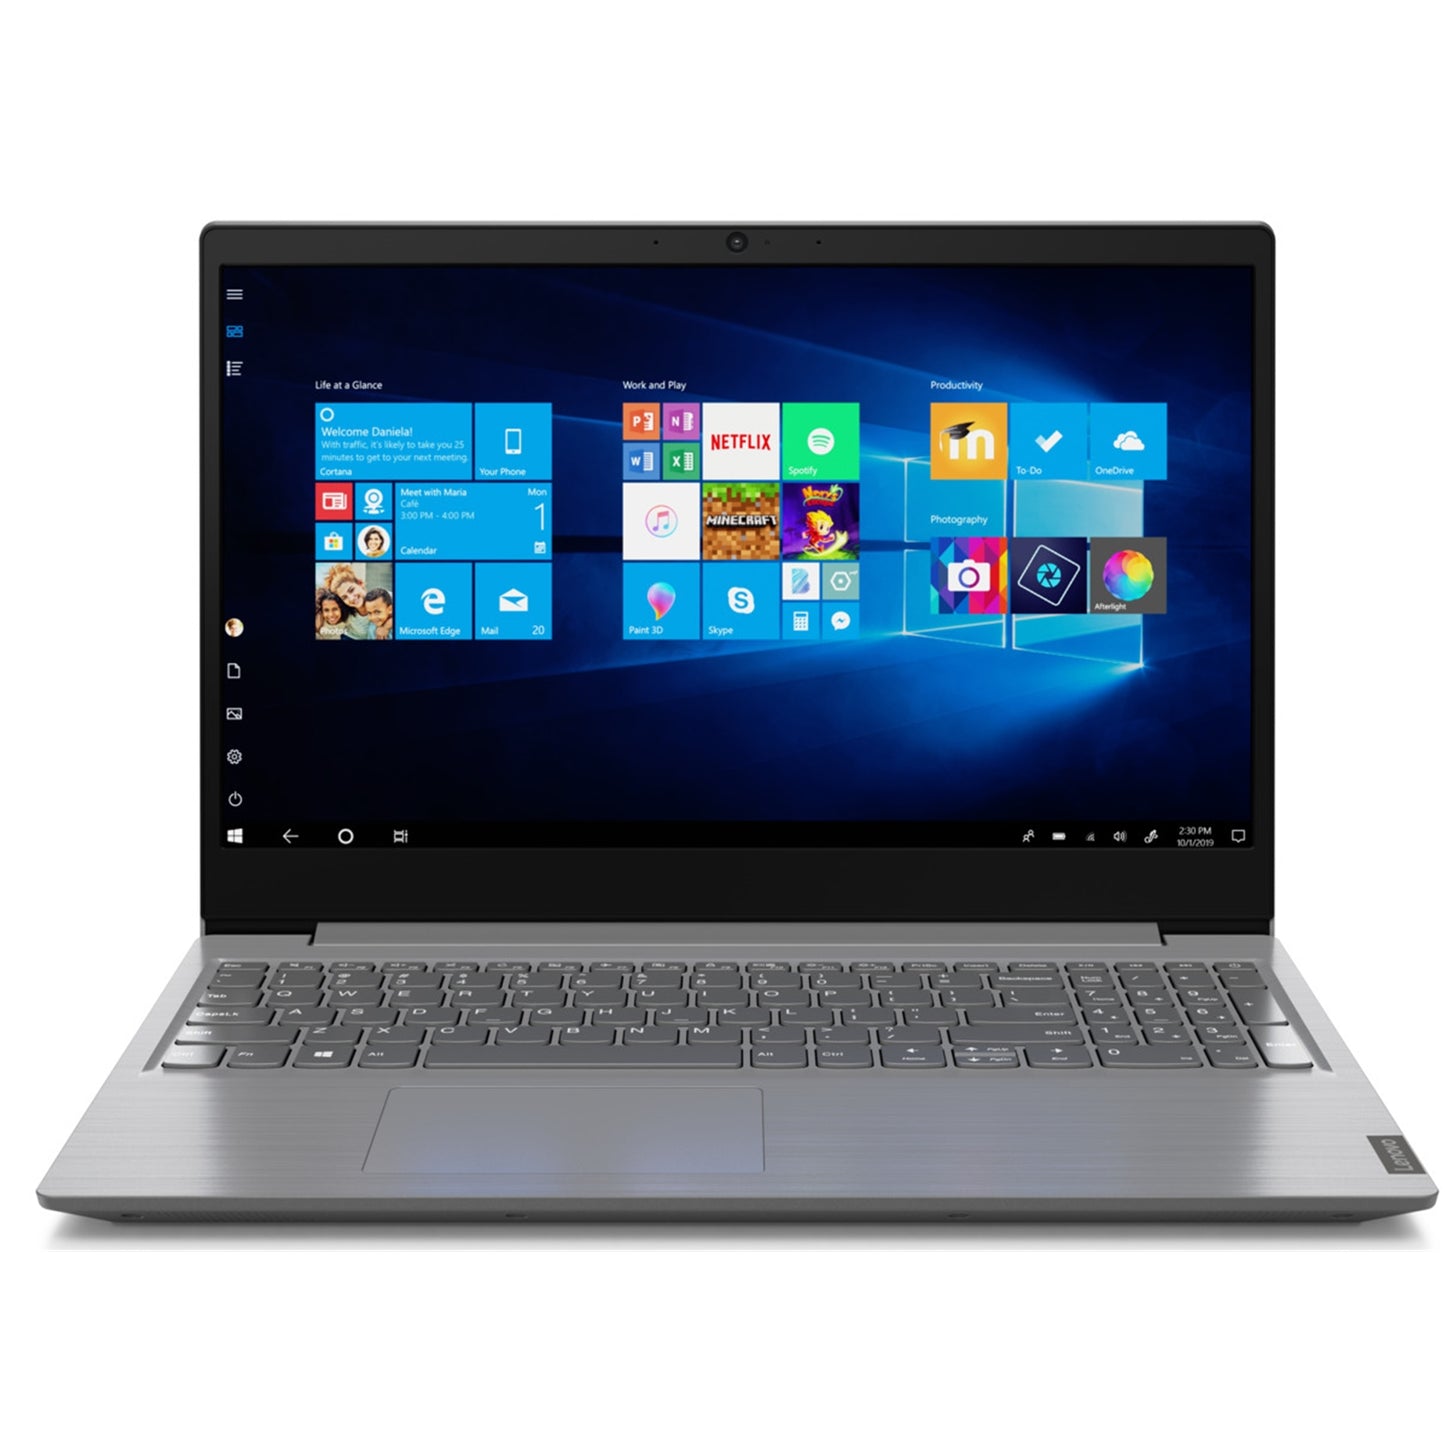 Lenovo V15-IML 82NB003LUK Laptop, 15.6 Inch Full HD 1080p Screen, Intel Core i5-10210U 10th Gen, 8GB RAM, 256GB SSD, Windows 10 Pro, Iron Grey